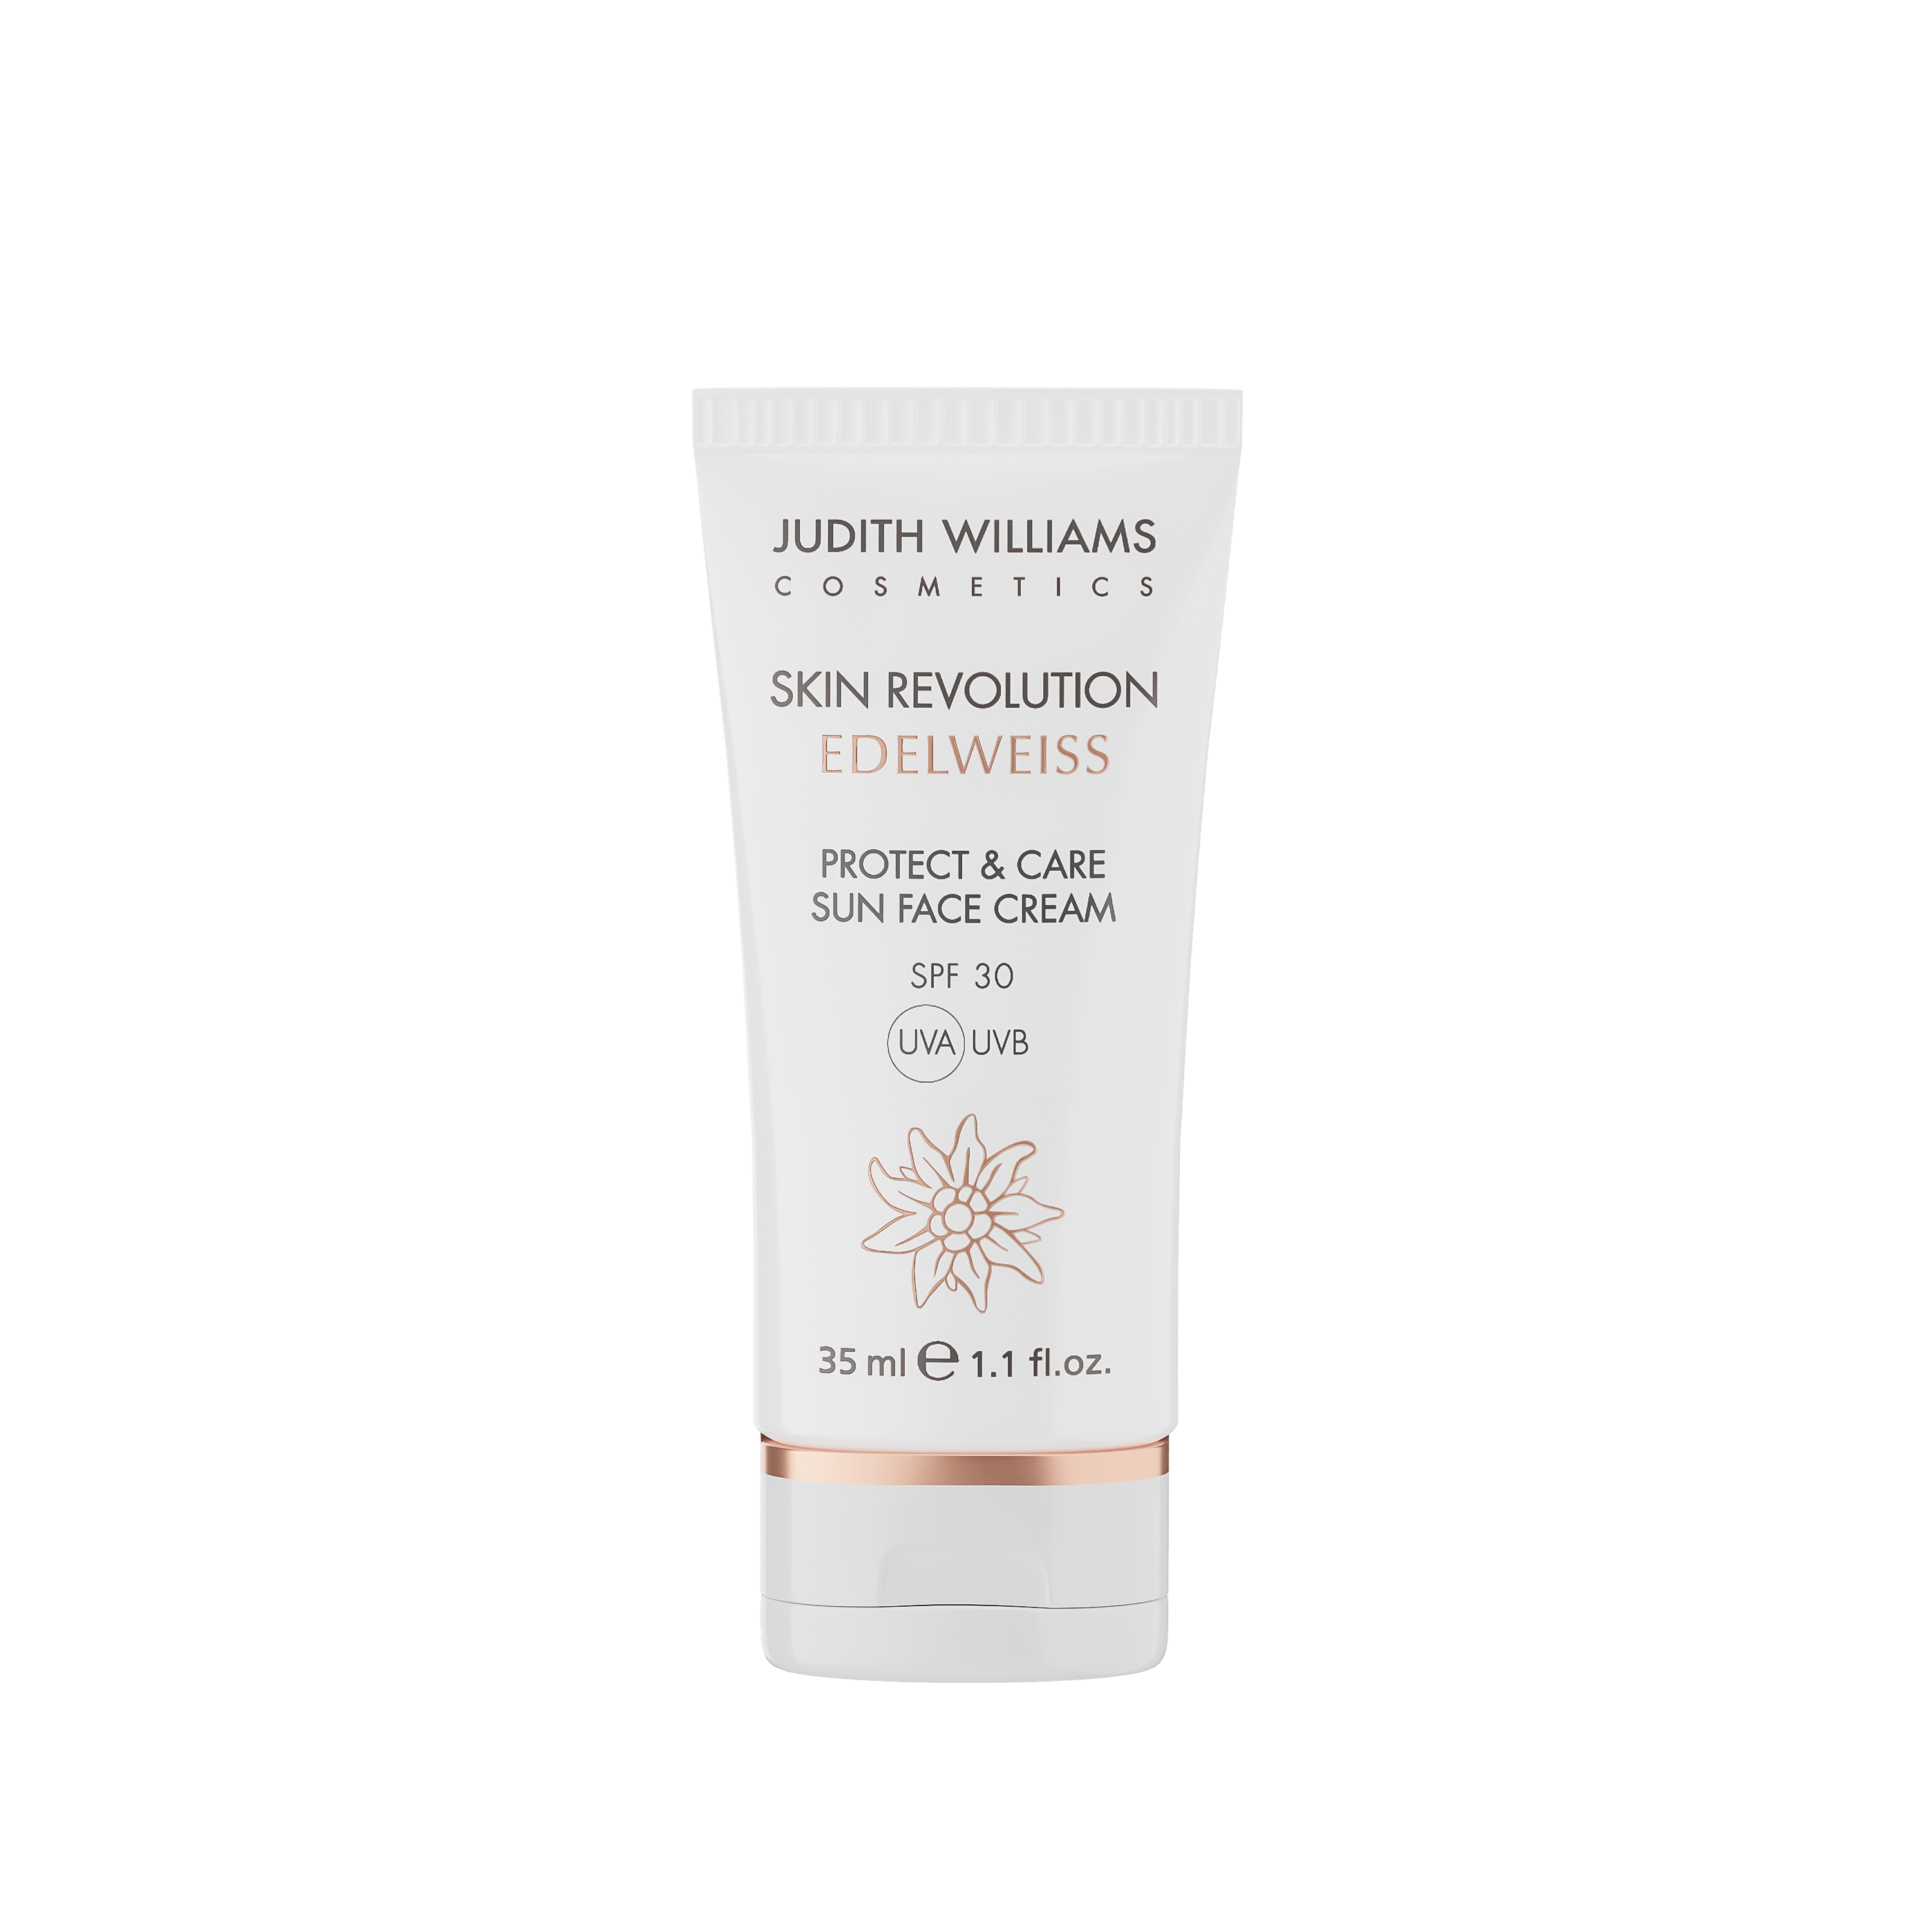 Gesichtscreme | Skin Revolution Edelweiss | Protect & Care Sun Face Cream | Judith Williams